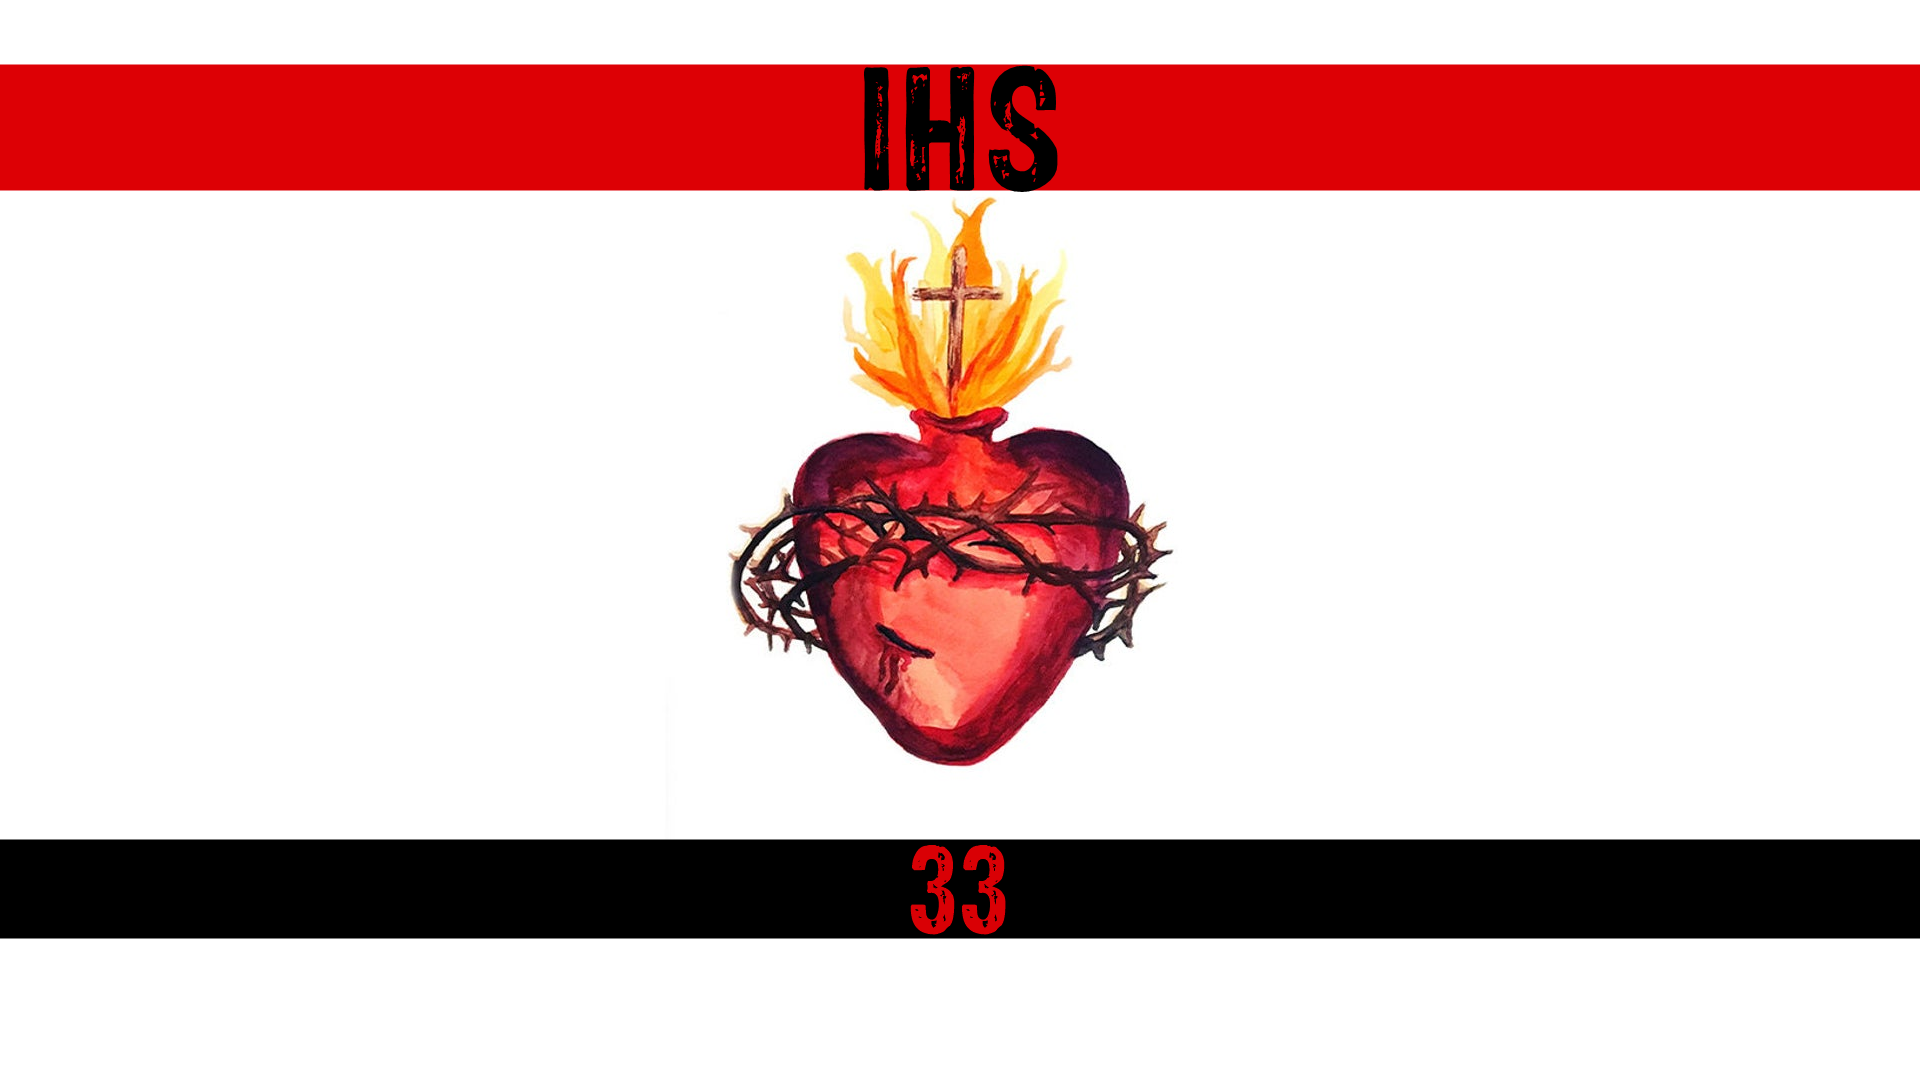 IHS Jesus Christ Sacred Heart Red White Black 1920x1080